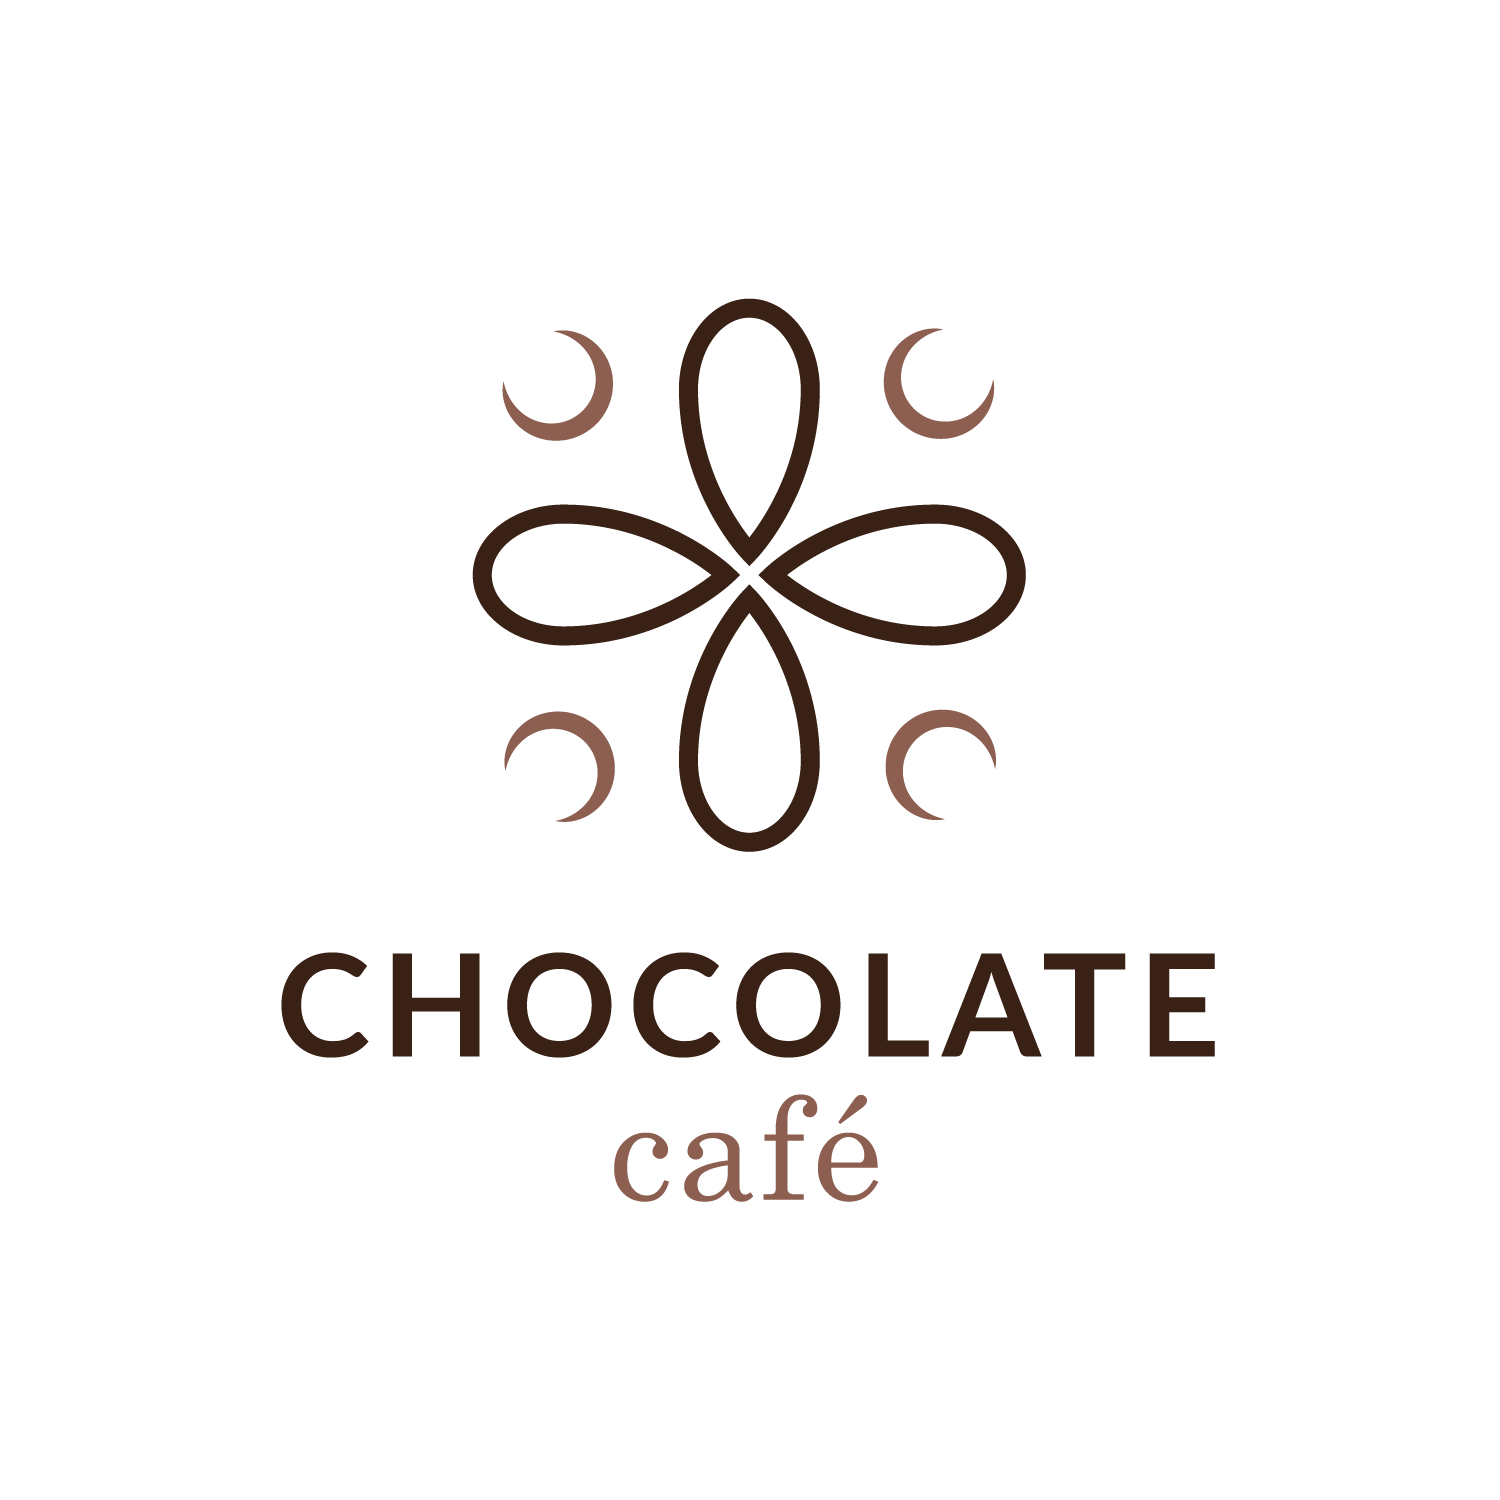 Chocolate Cafe Columbus Ohio 